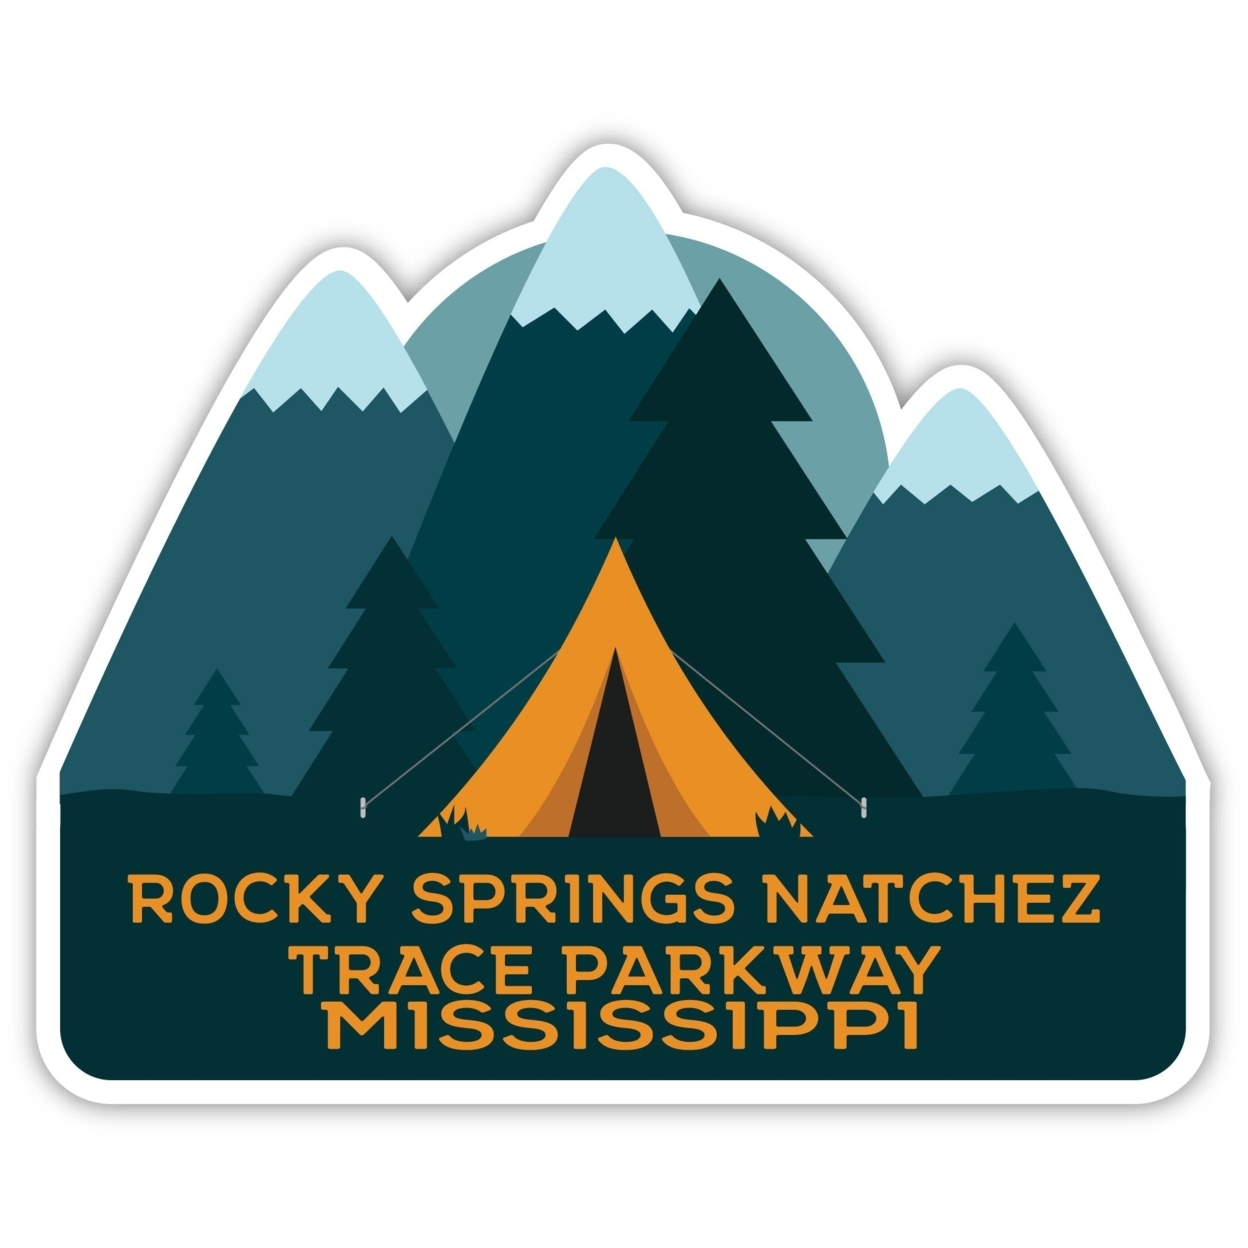 Rocky Springs Natchez Trace Parkway Mississippi Souvenir Decorative Stickers (Choose Theme And Size) - Single Unit, 4-Inch, Tent